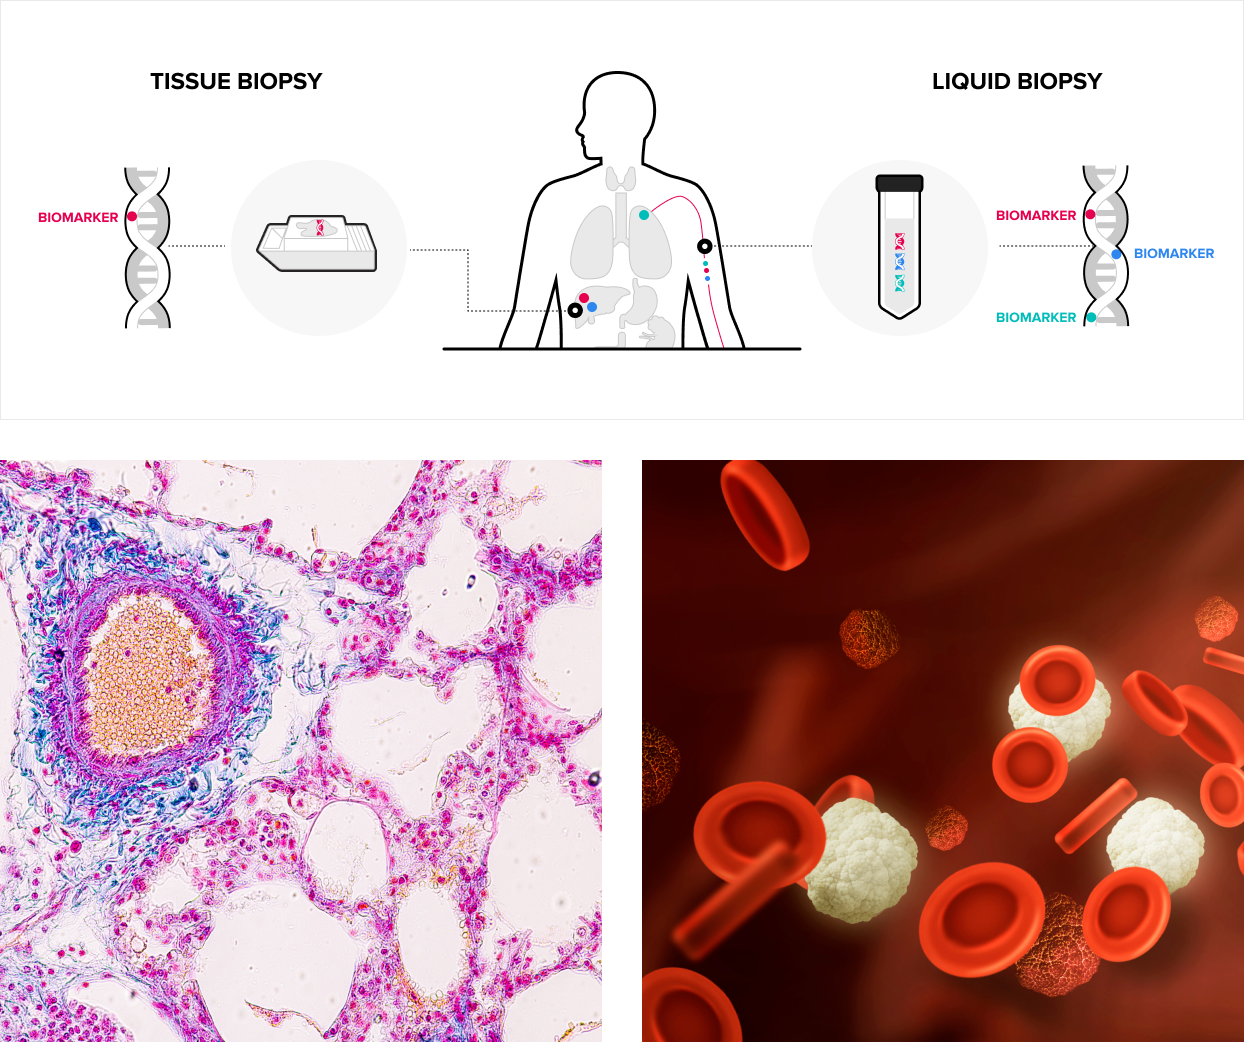 Tissue biopsy / Liquid biopsy